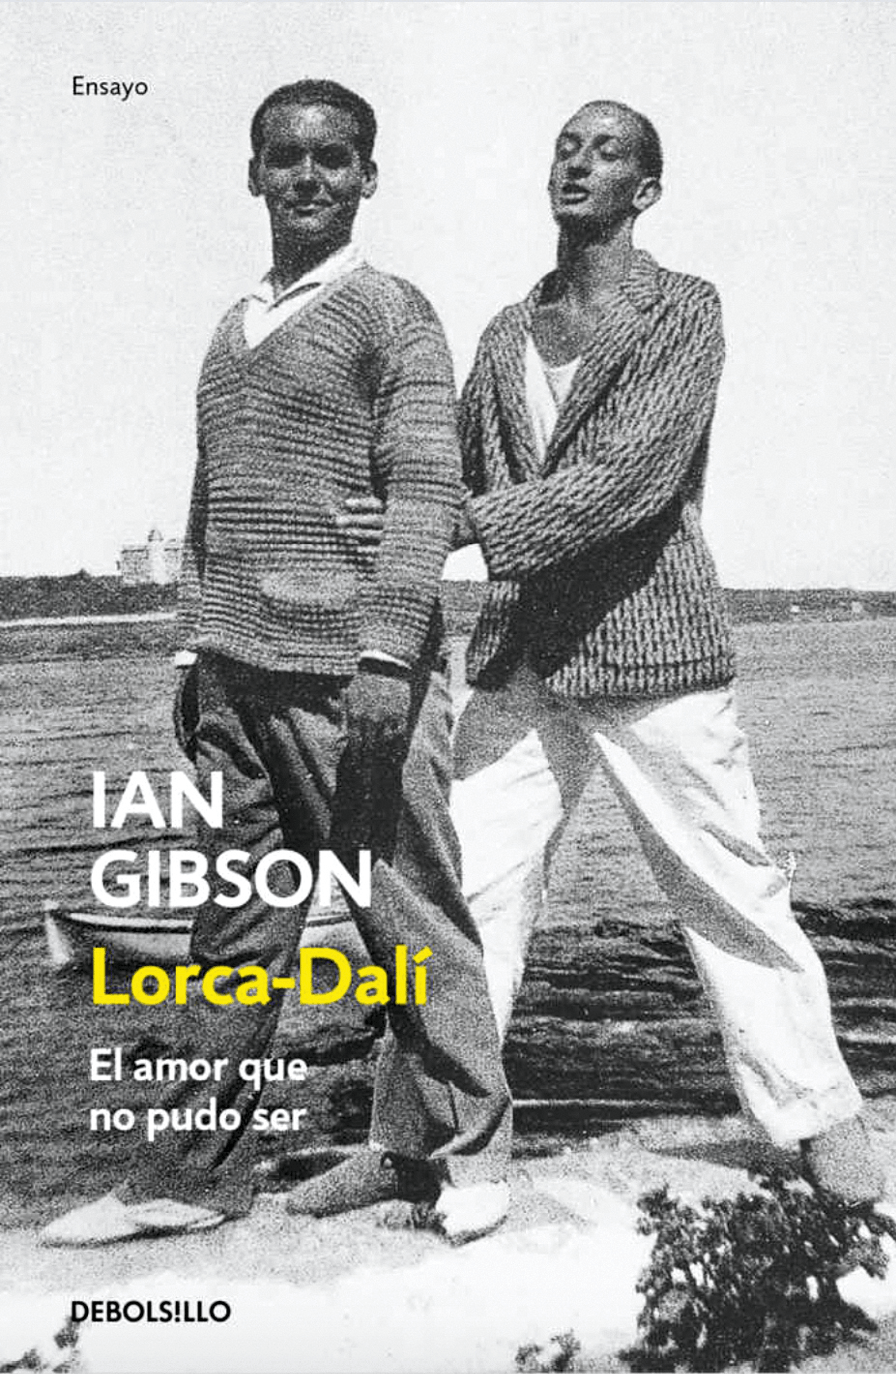 Ian Gibson, Lorca-Dalí. El amor que no pudo ser, 2016